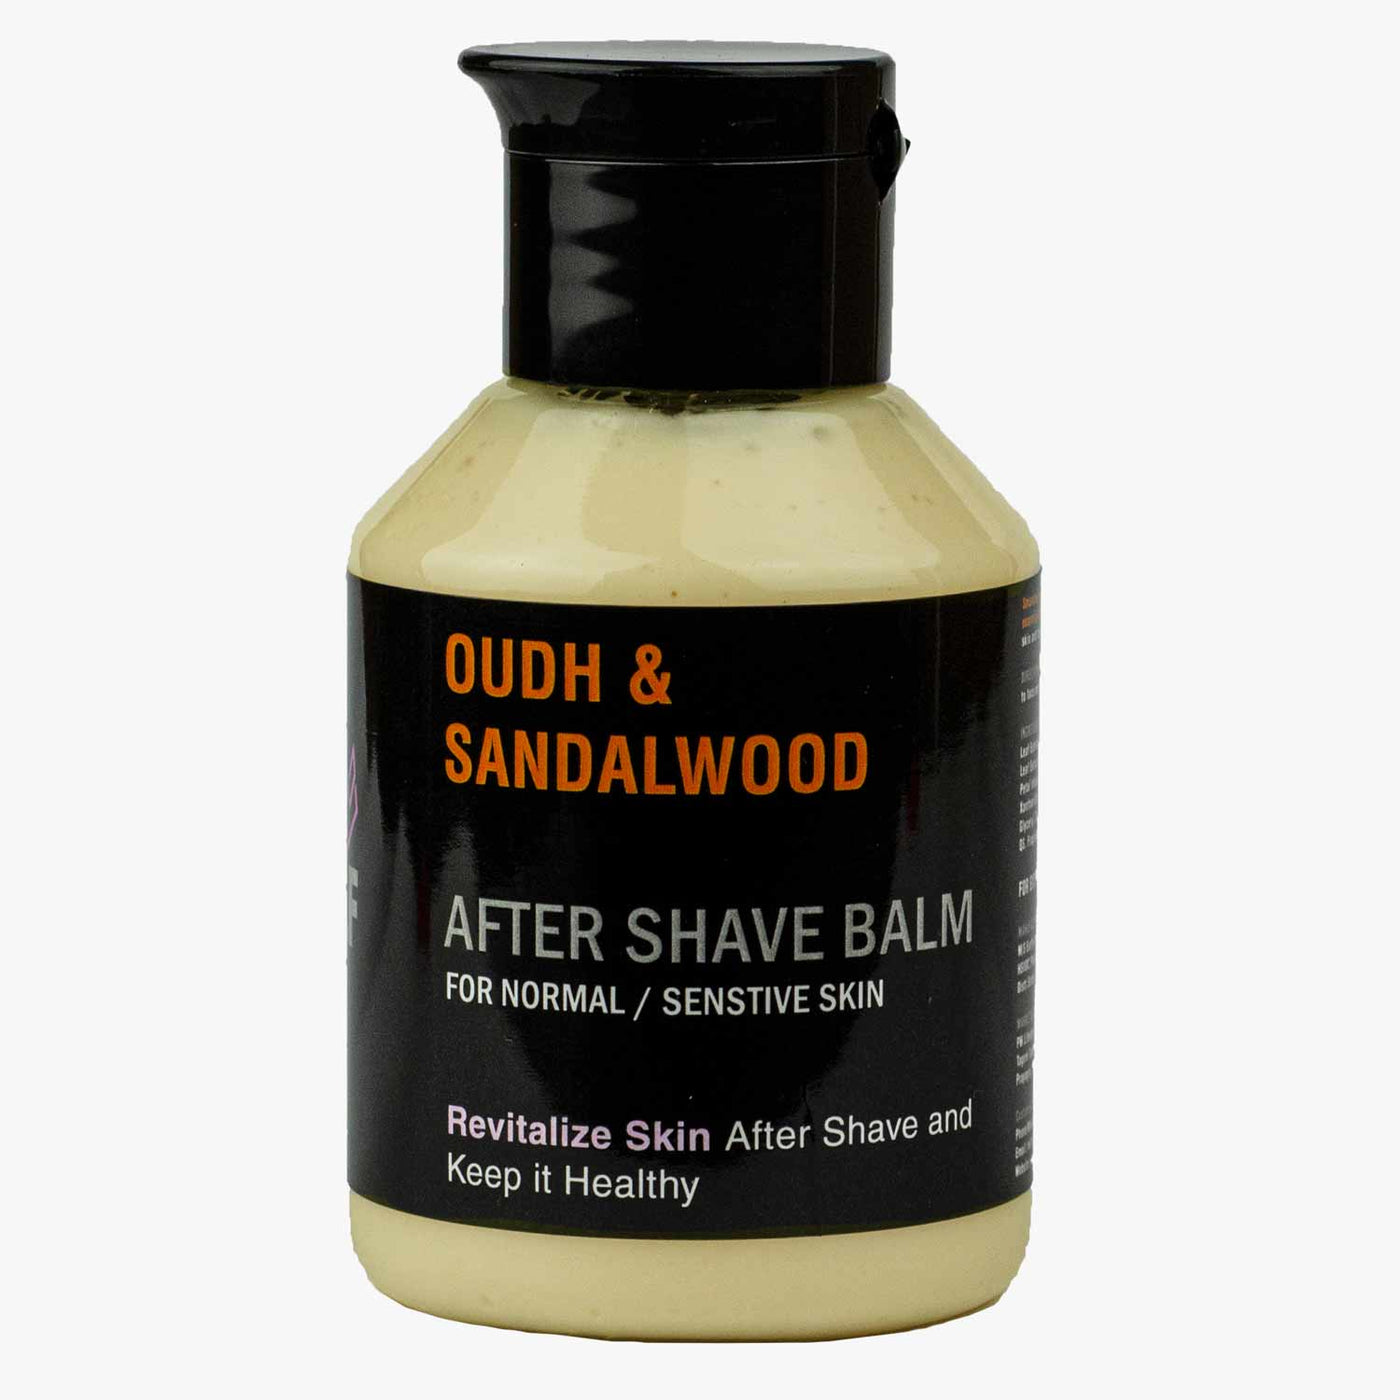 After Shave Balm - OUDH & SANDALWOOD - AftershavePinkWoolf